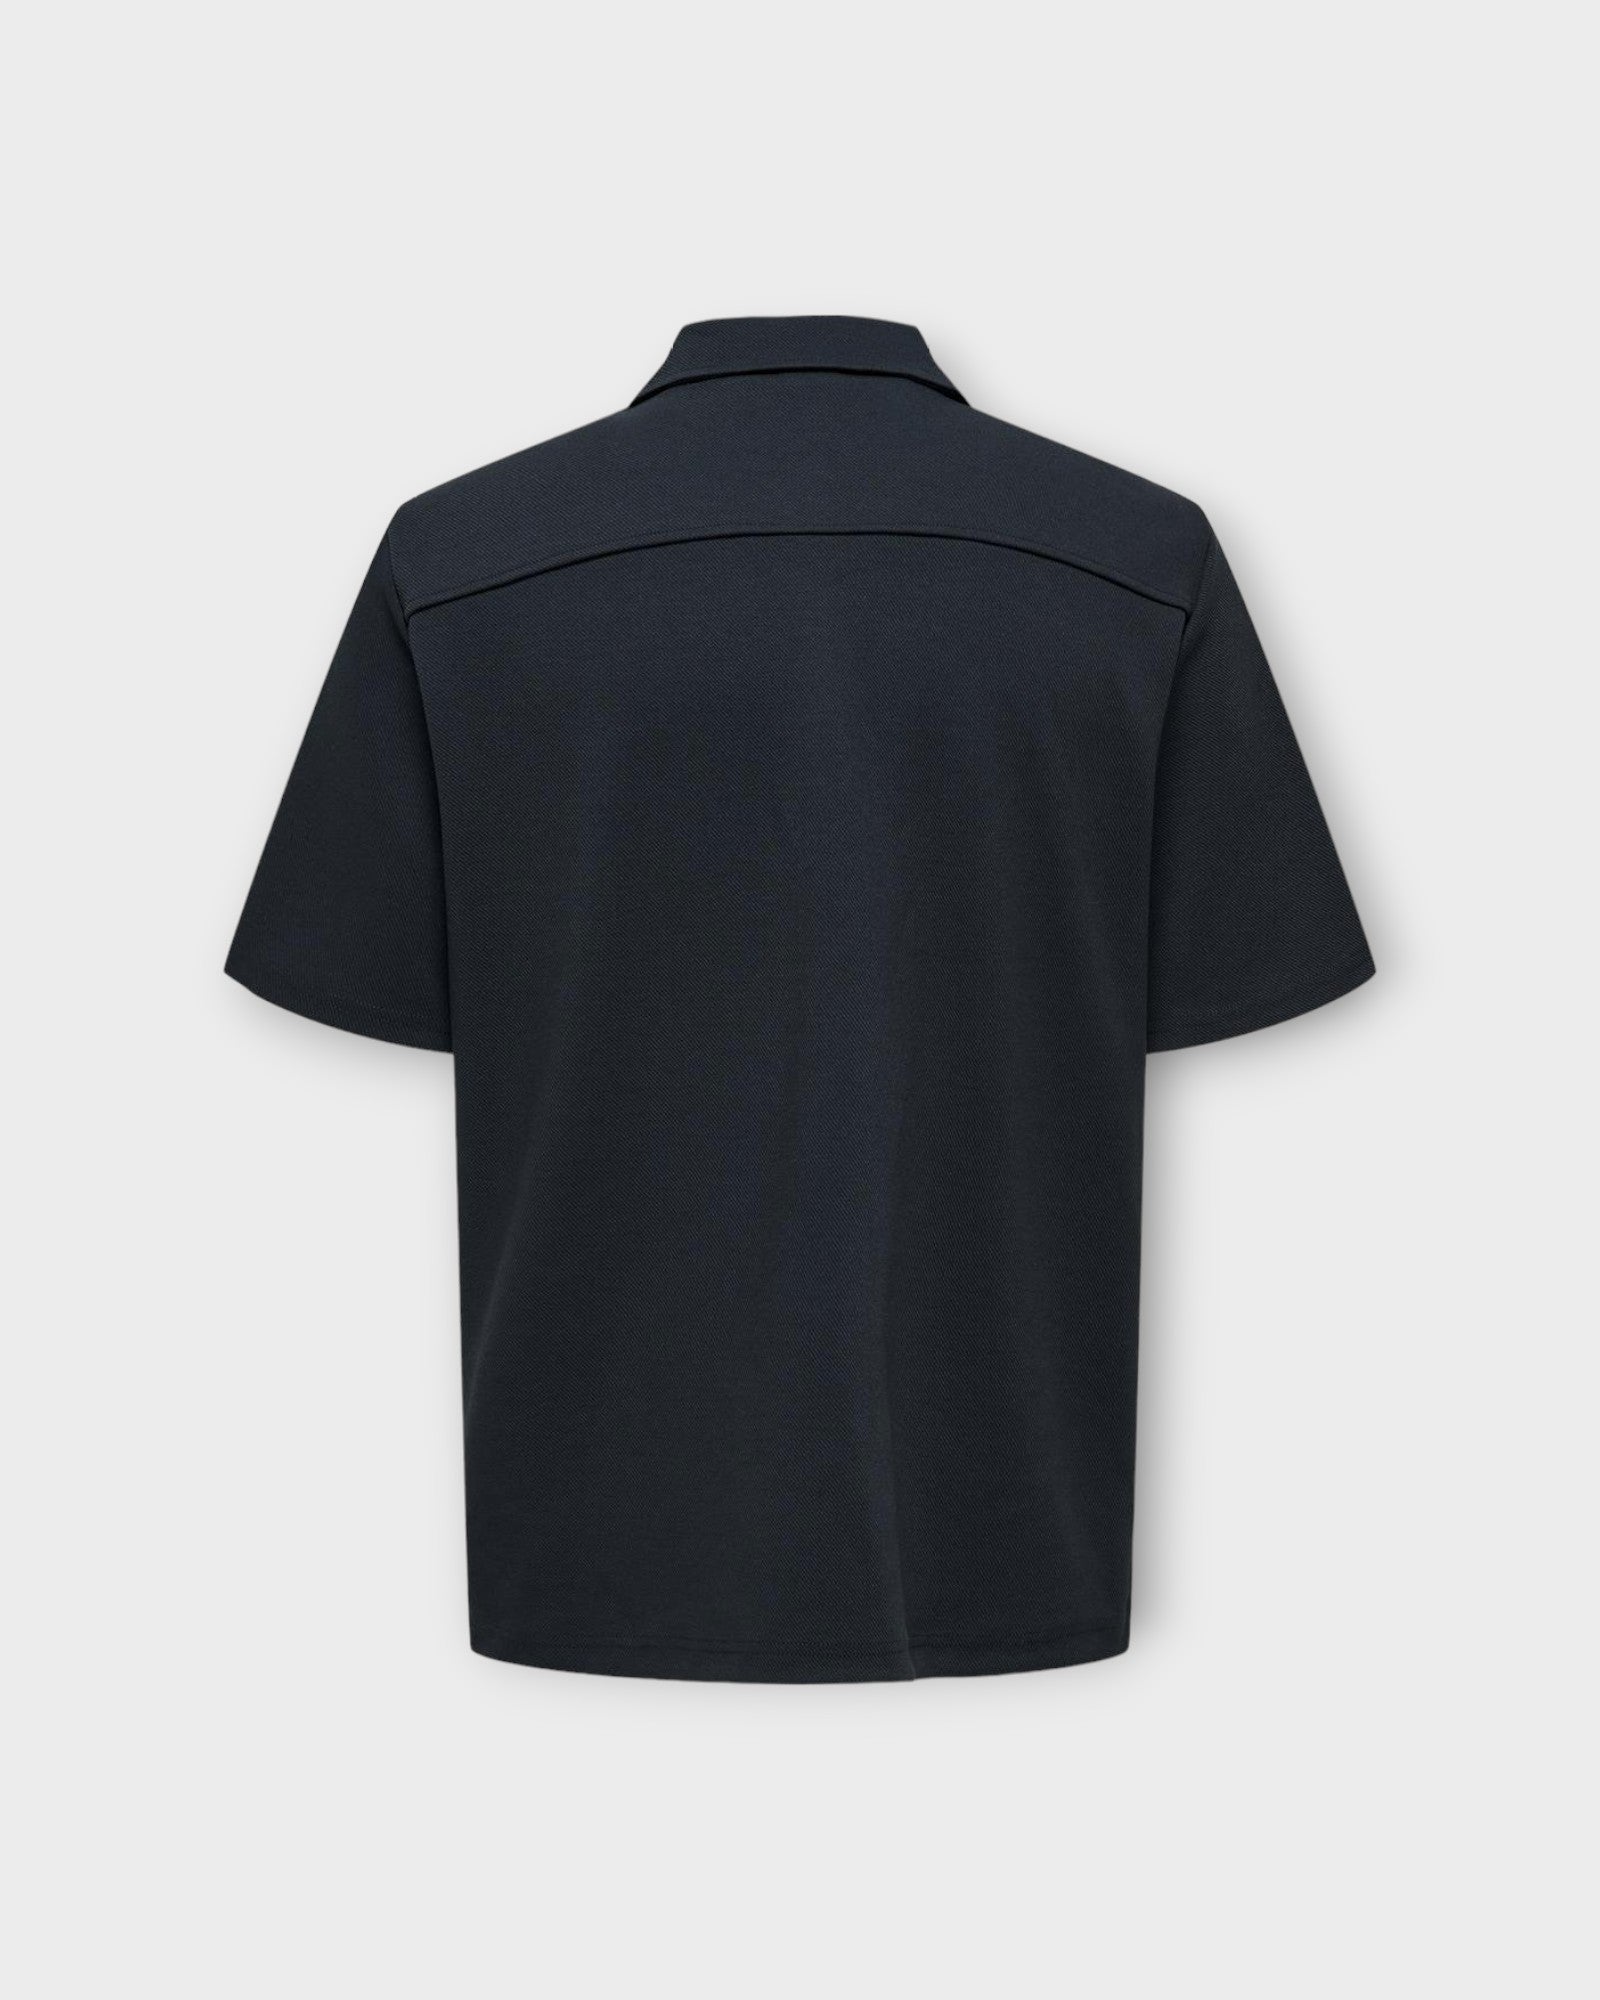 Kodyl SS Shirt Sweat Dark Navy fra Only and Sons. Kortærmet navy blå skjorte i sweat kvalitet. Her set bagfra.